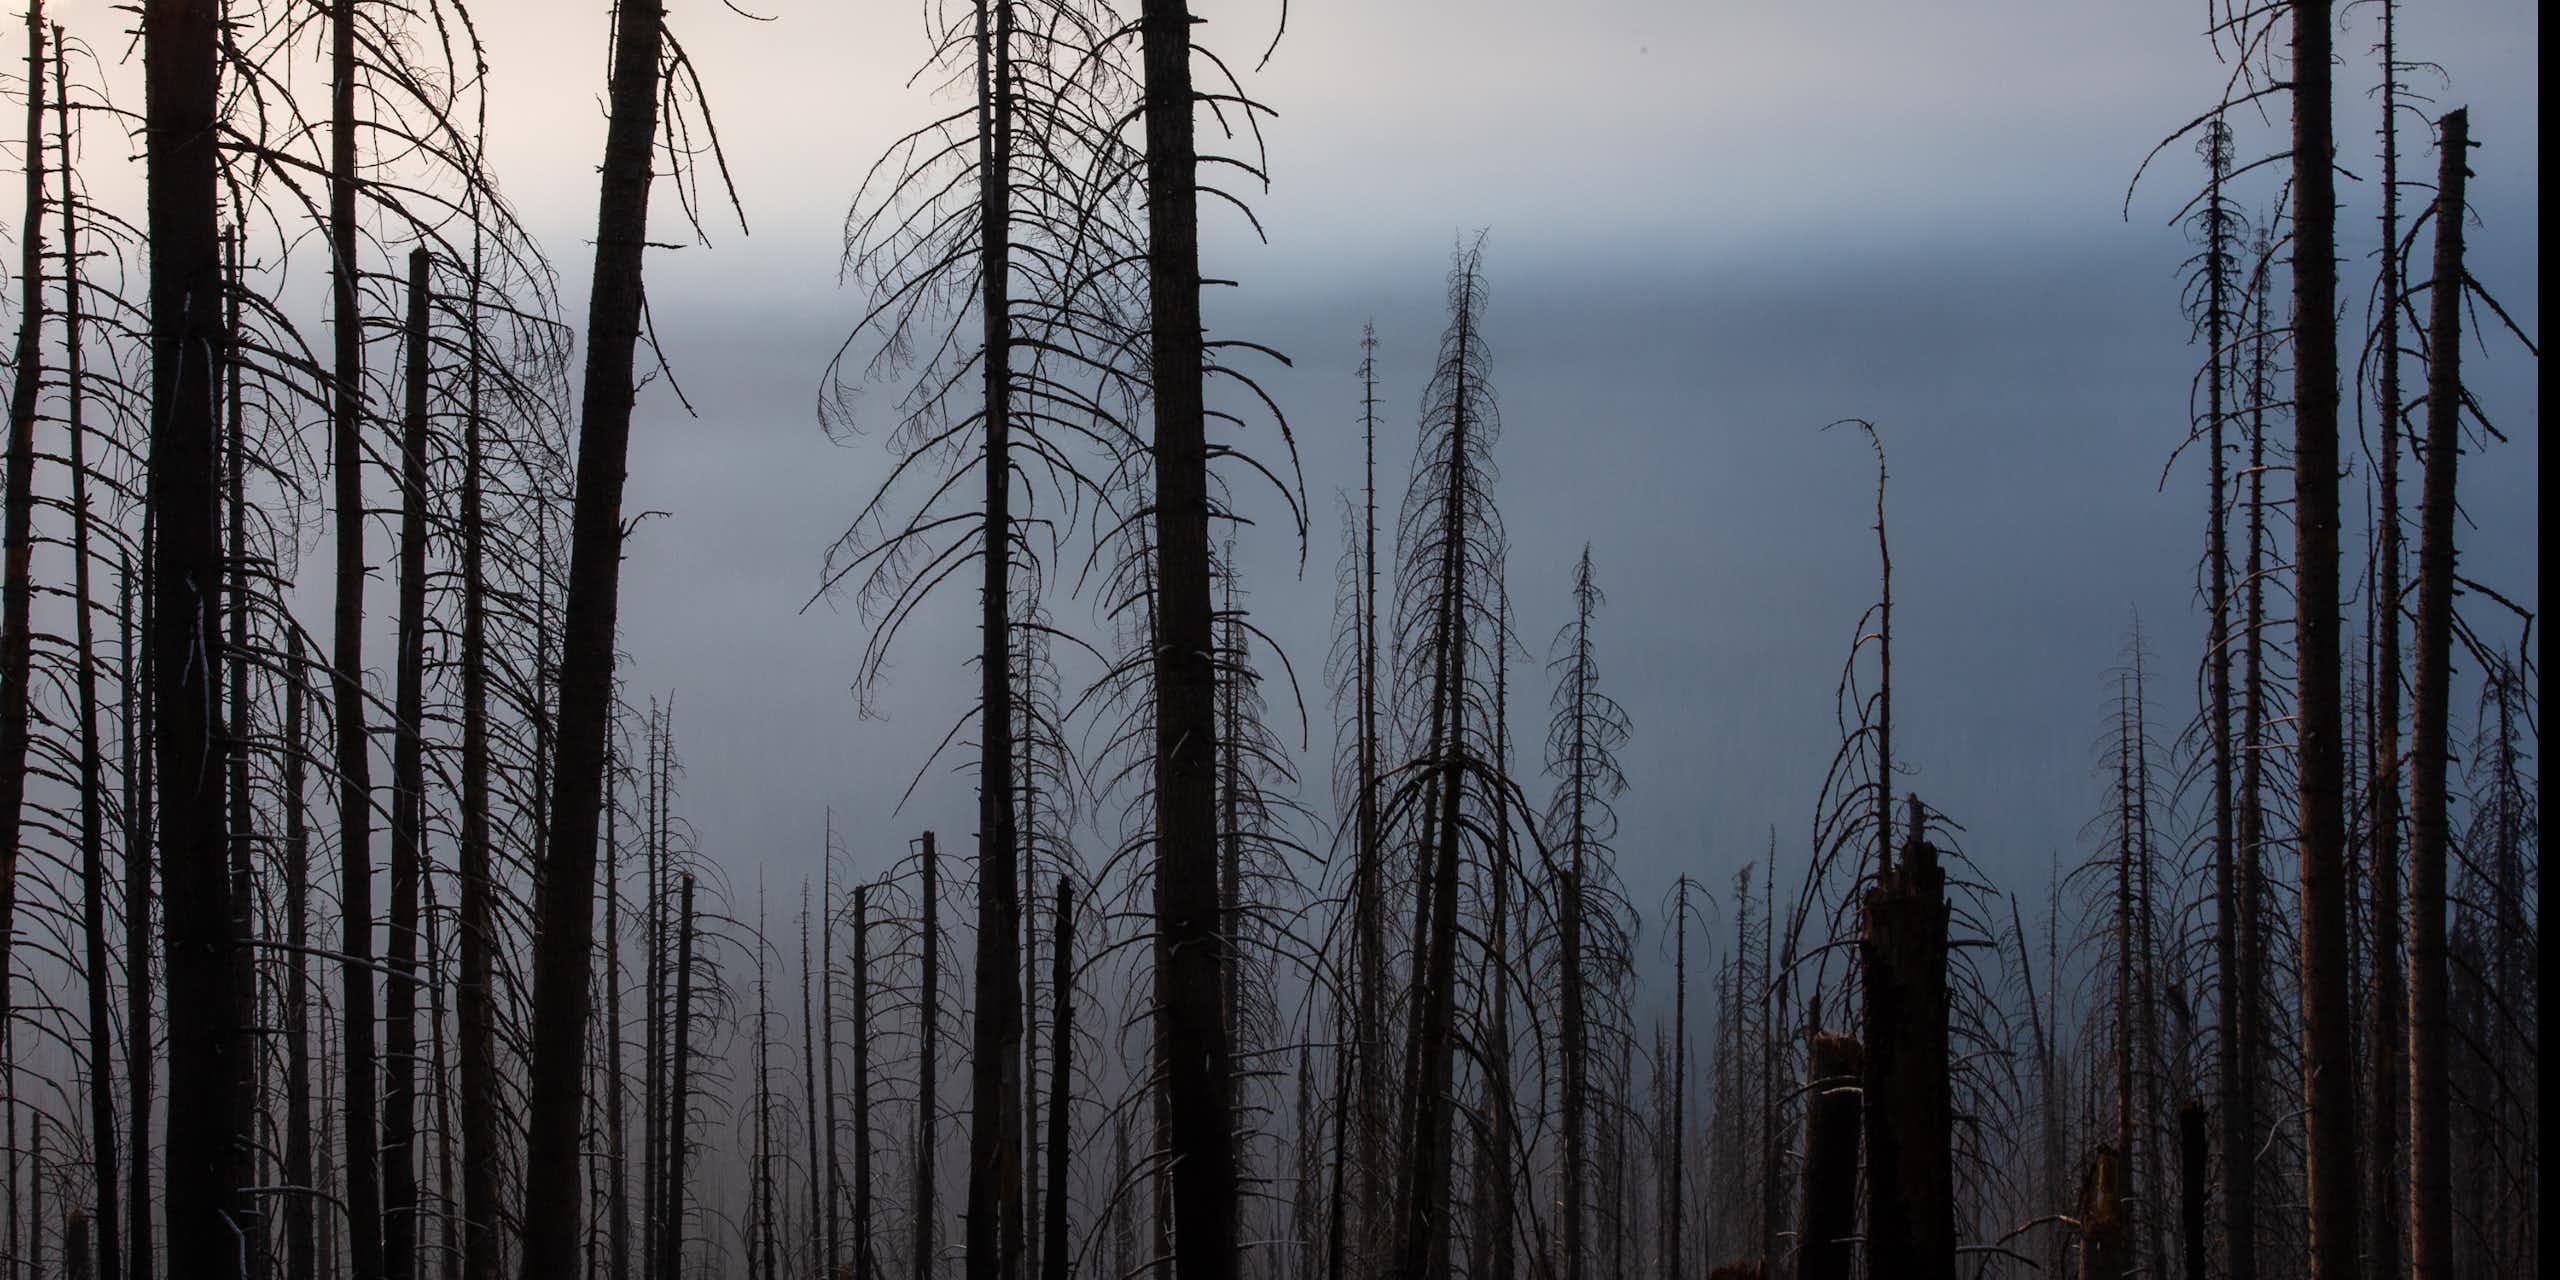 A landscape of burned trees